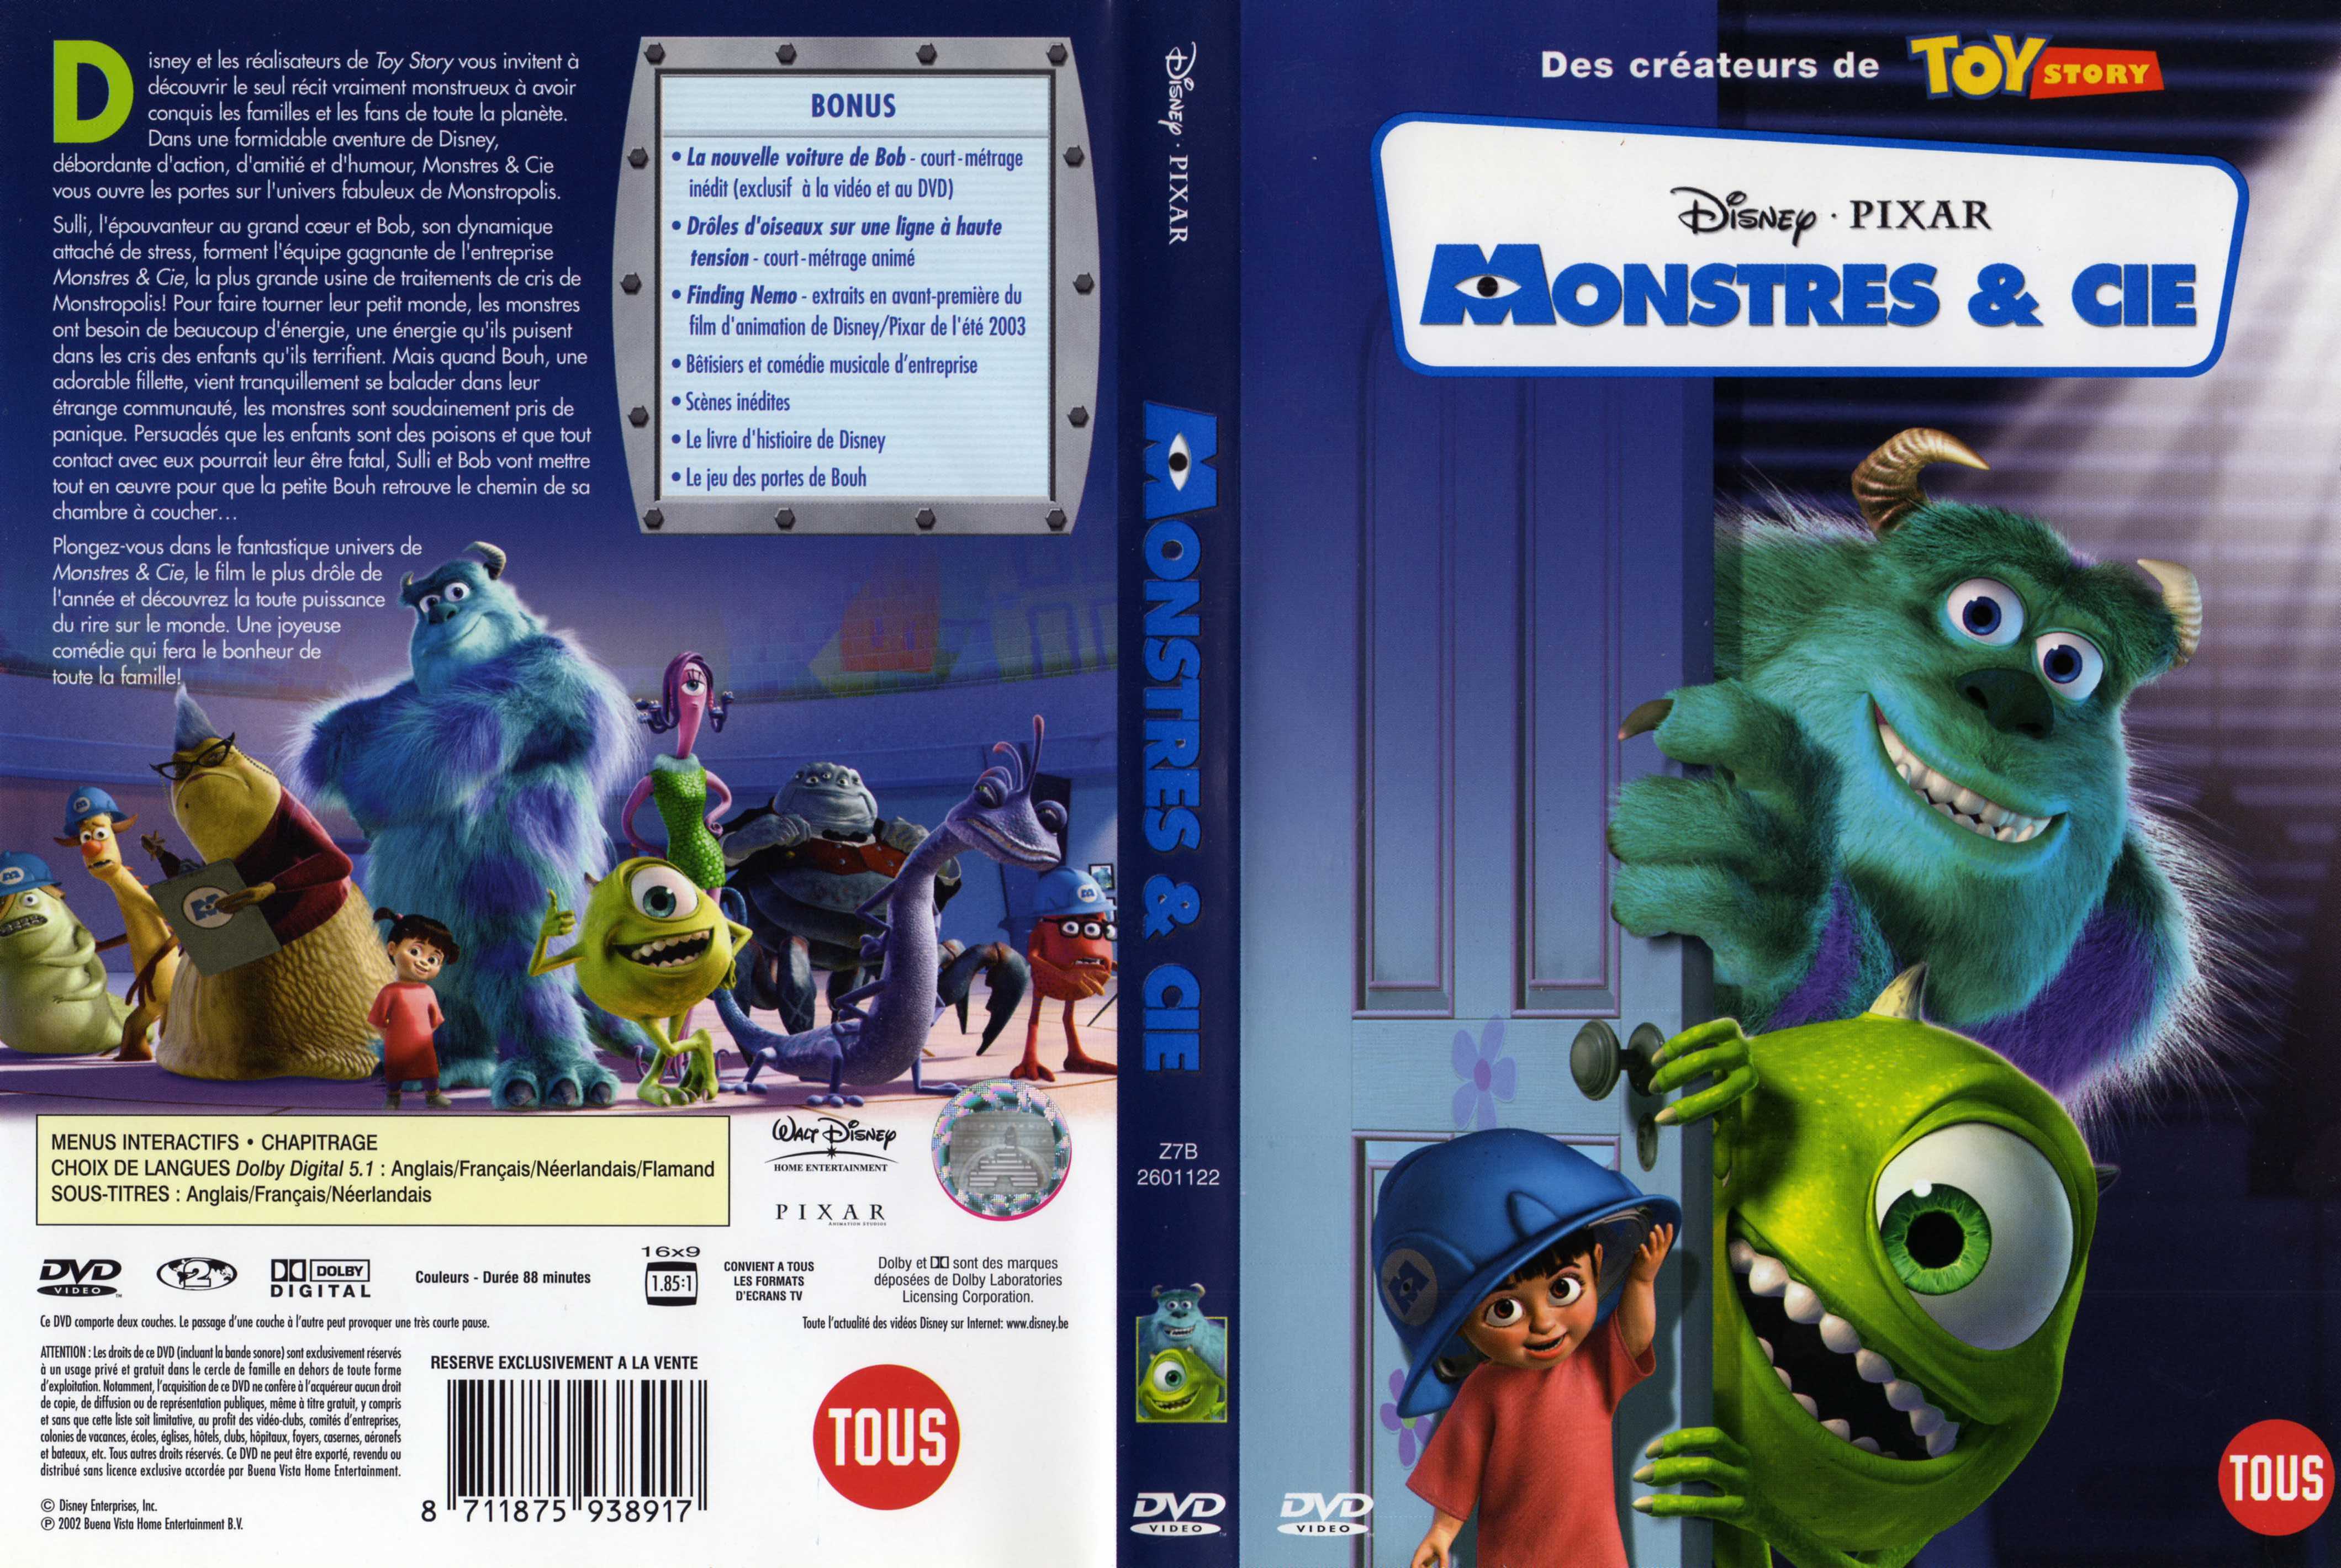 Jaquette DVD Monstres et Cie v3